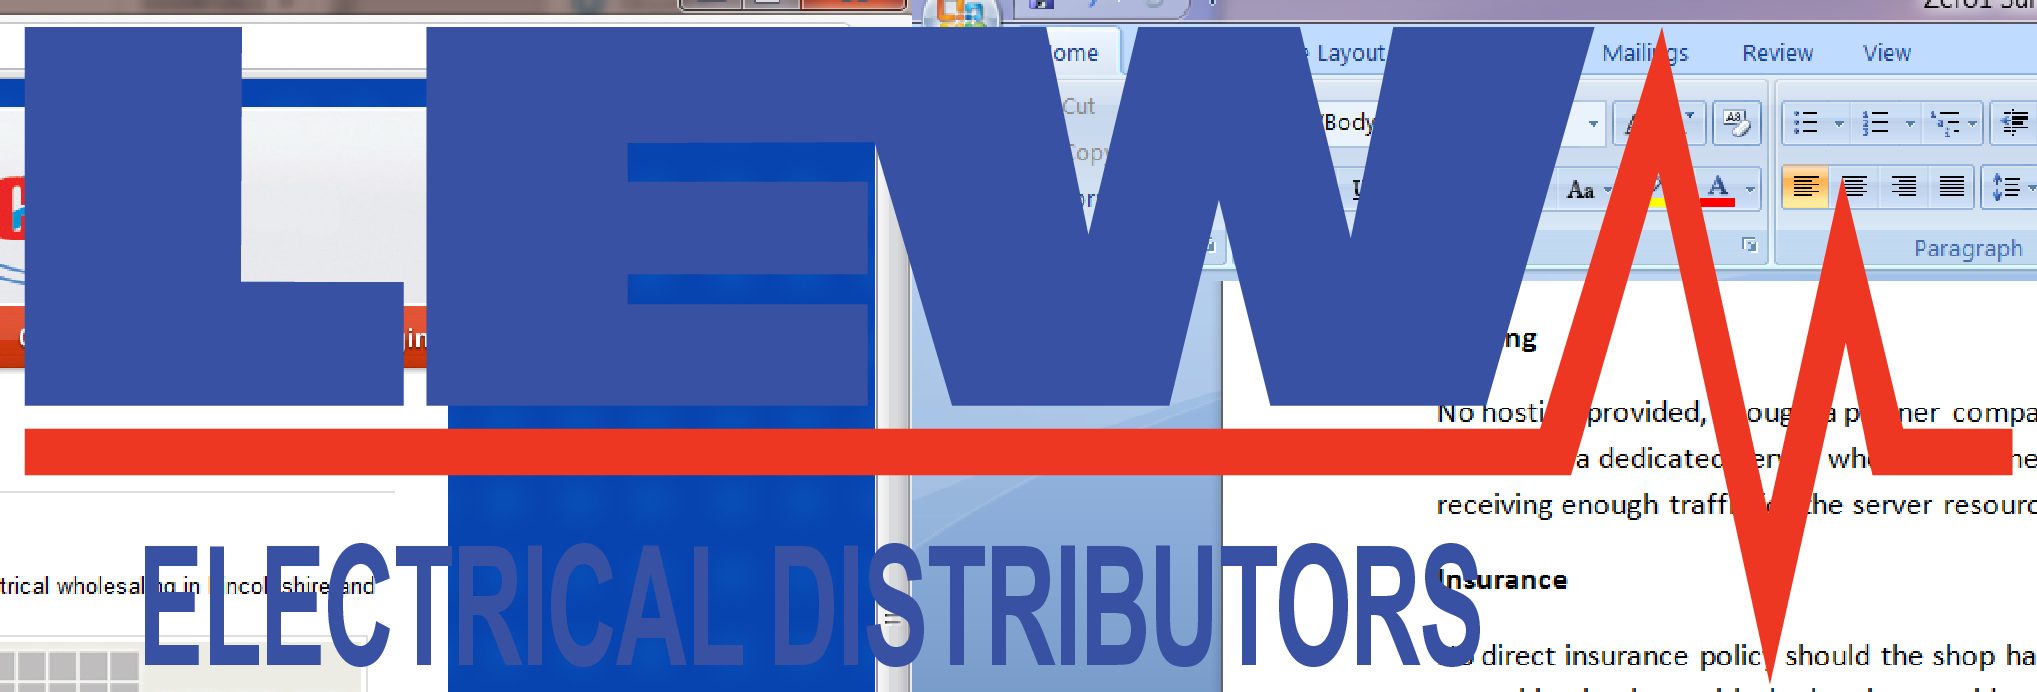 LEW Electrical Distributors, Best Wholesaler Website